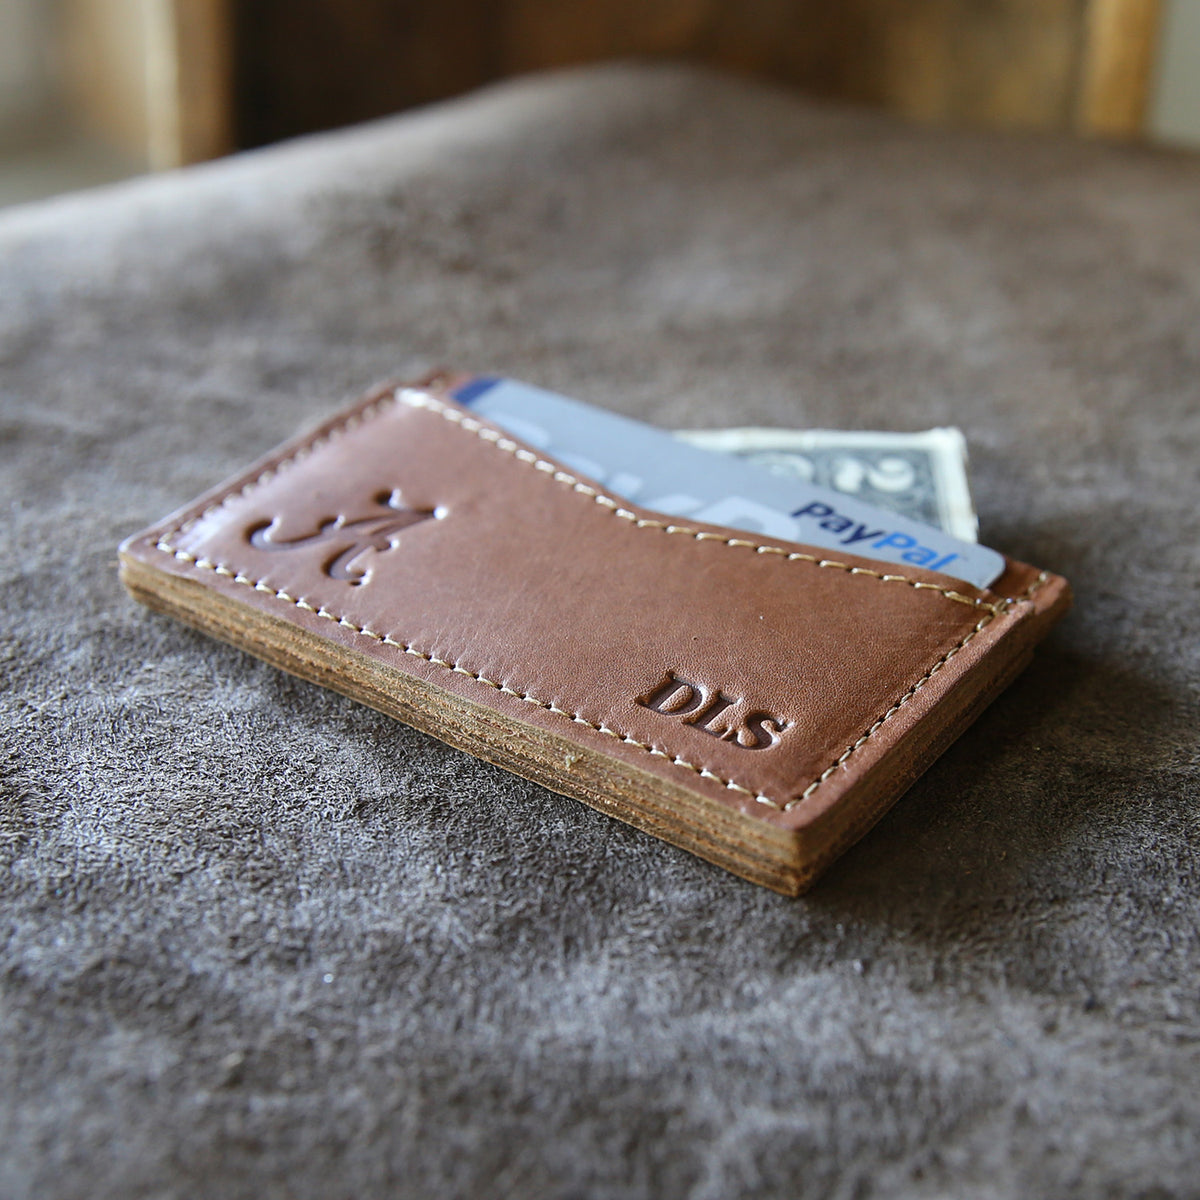 The Officially Licensed Alabama Vernon Fine Leather Front Pocket Card Holder Wallet